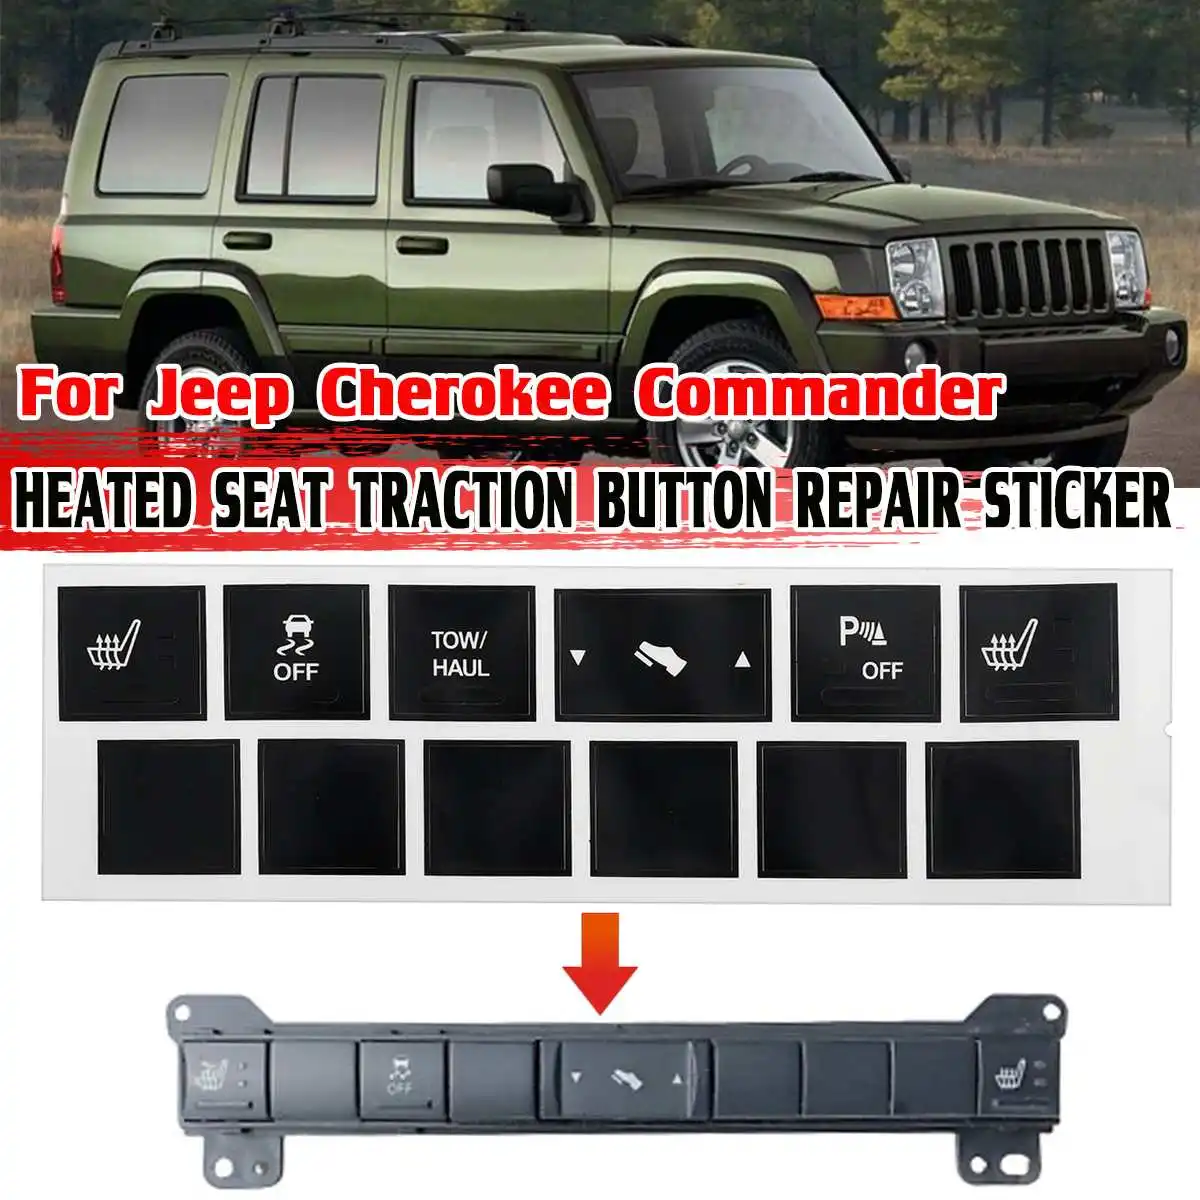 Chrysler Jeep Cherokee サンシェード8面【送料込みに変更】 - garantiadesaude.org.br